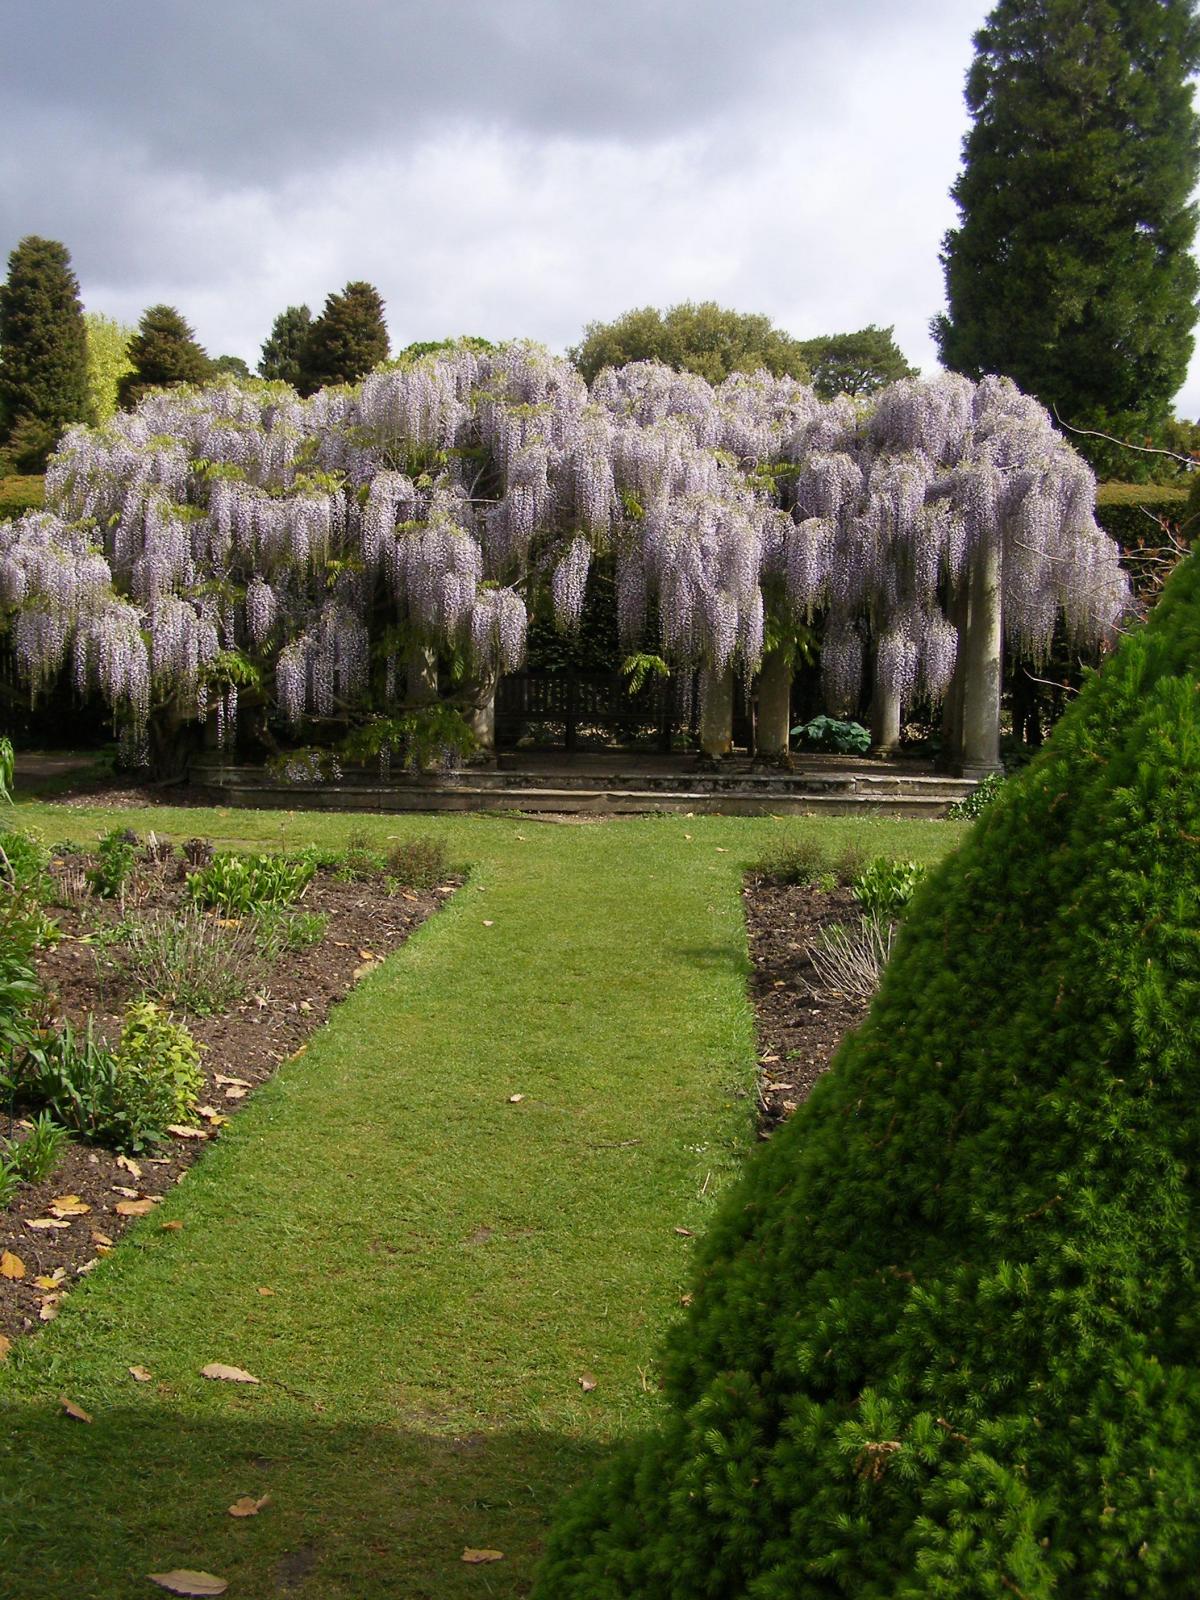 Macrobotrys wisteria The Sundial Garden by Nigel Philpott